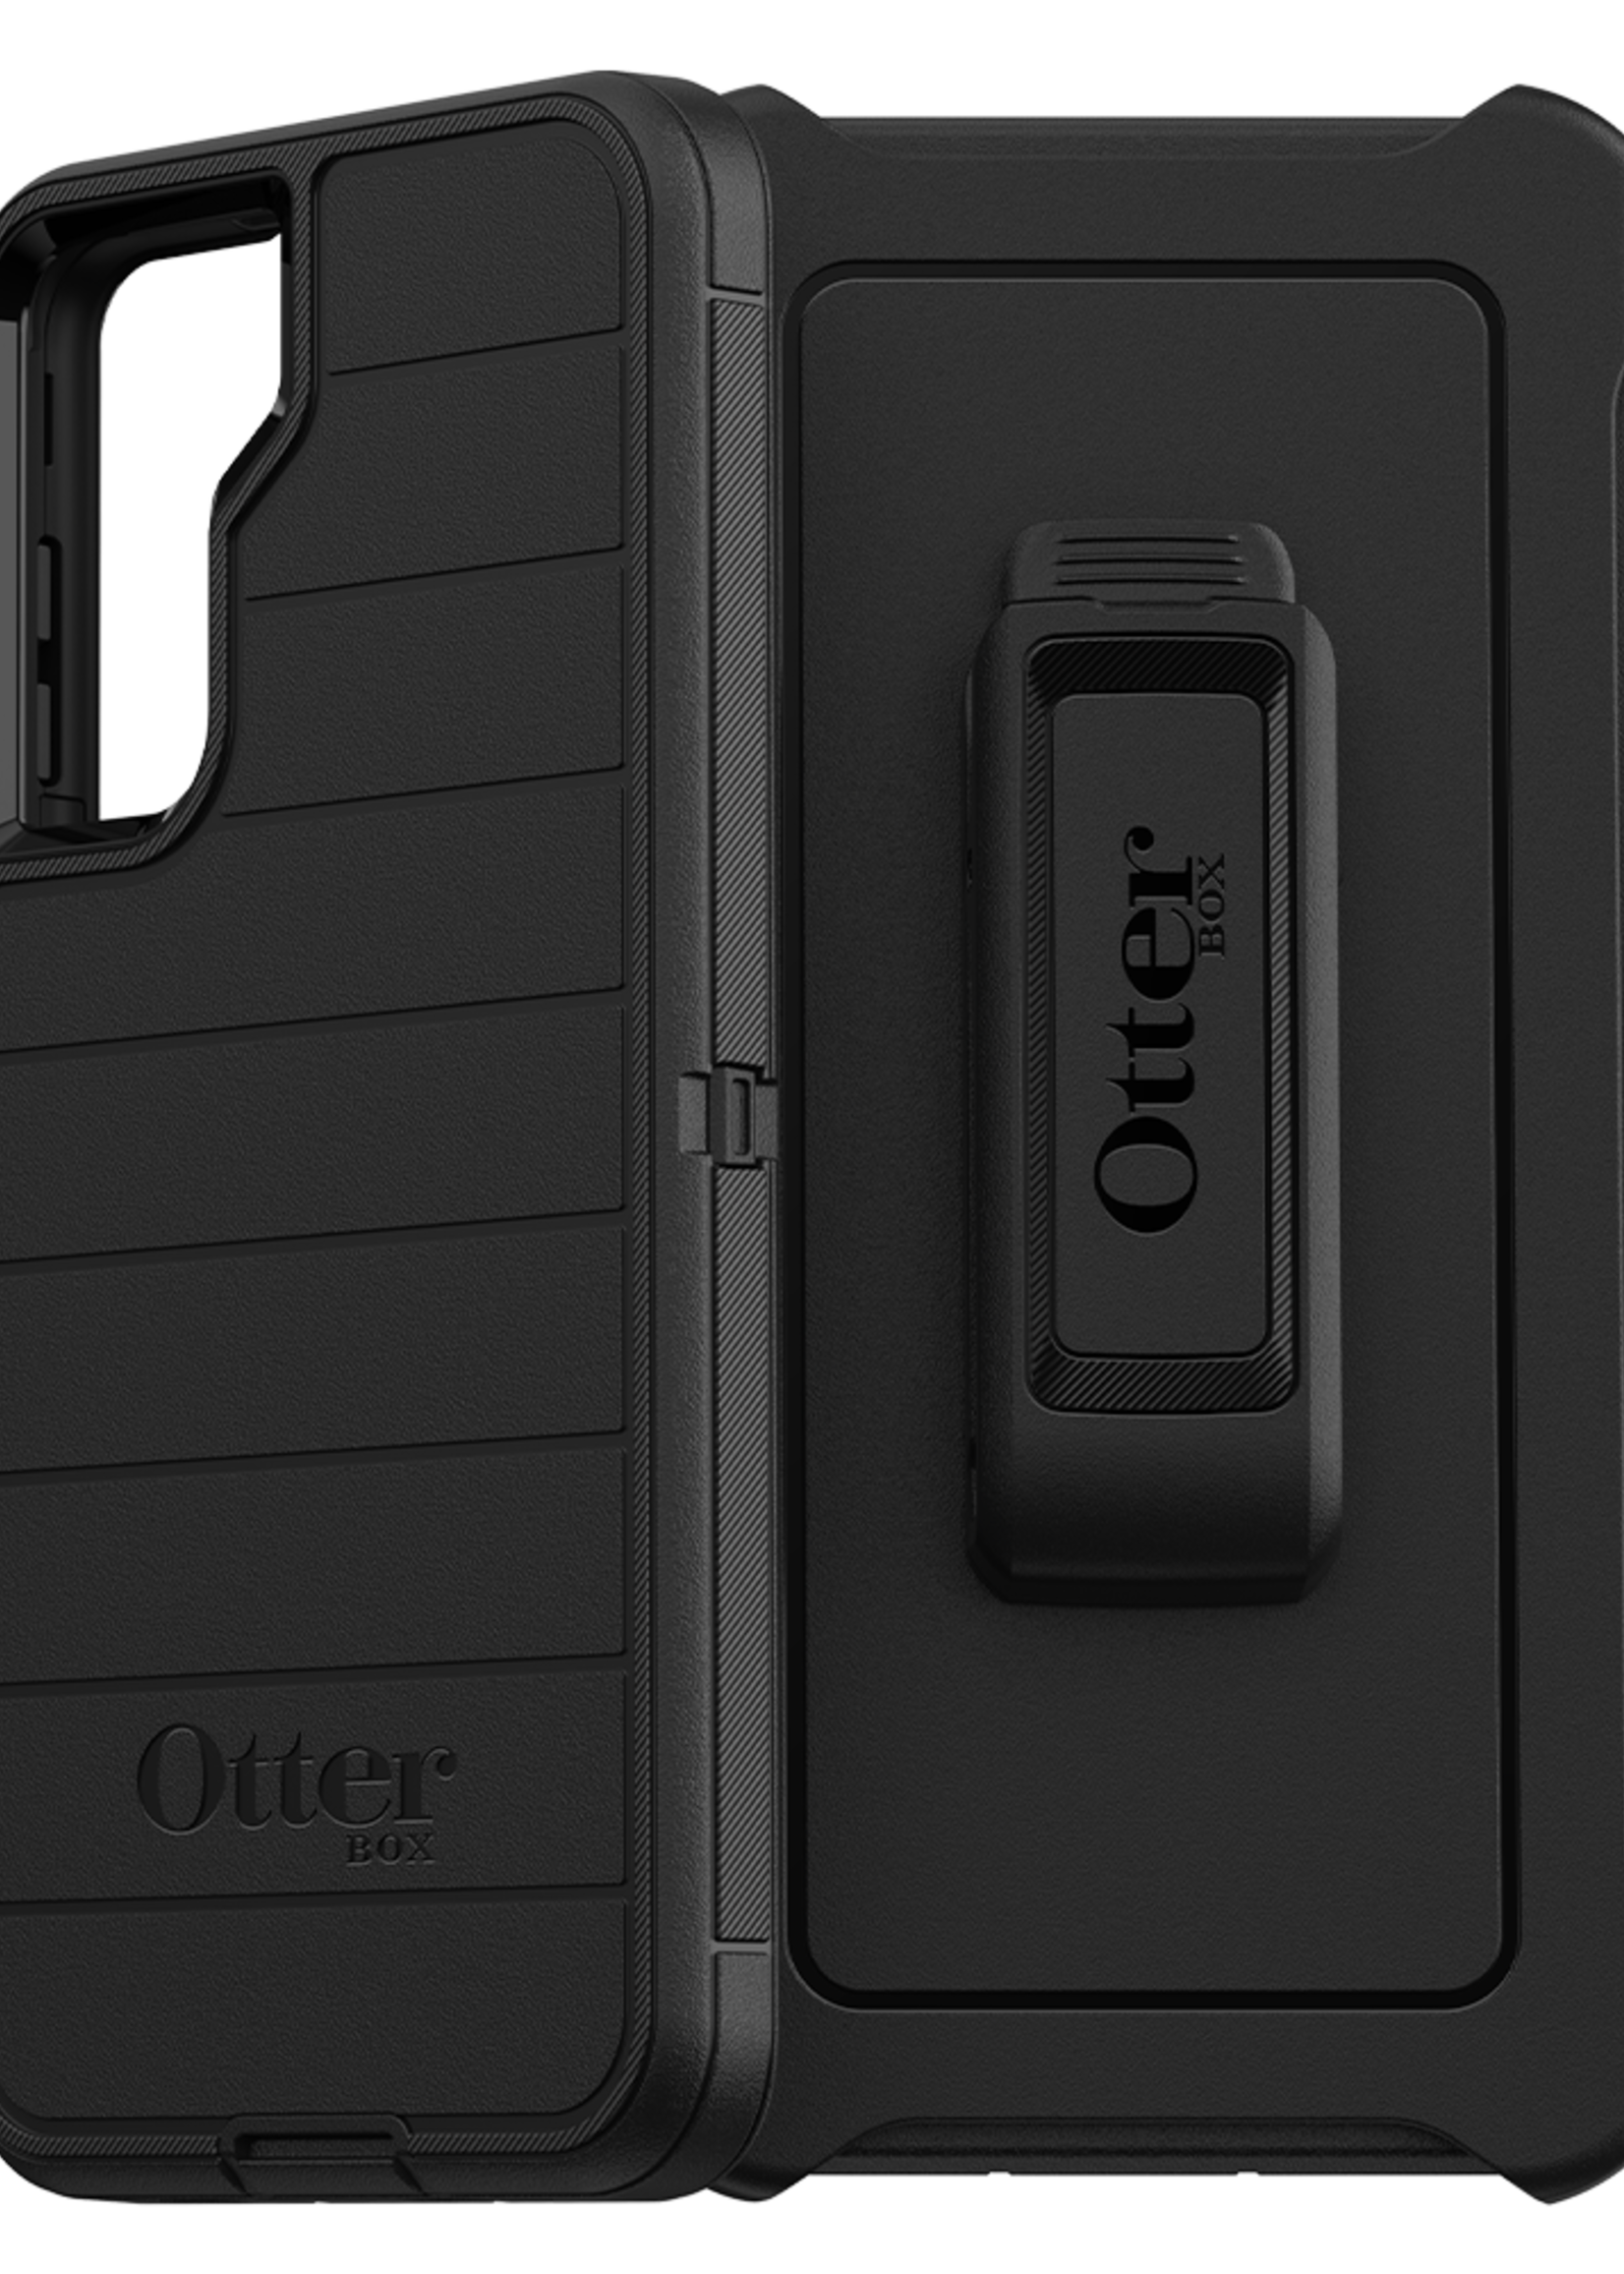 Otterbox OtterBox - Defender Pro Case for Samsung Galaxy S21 5G - Black